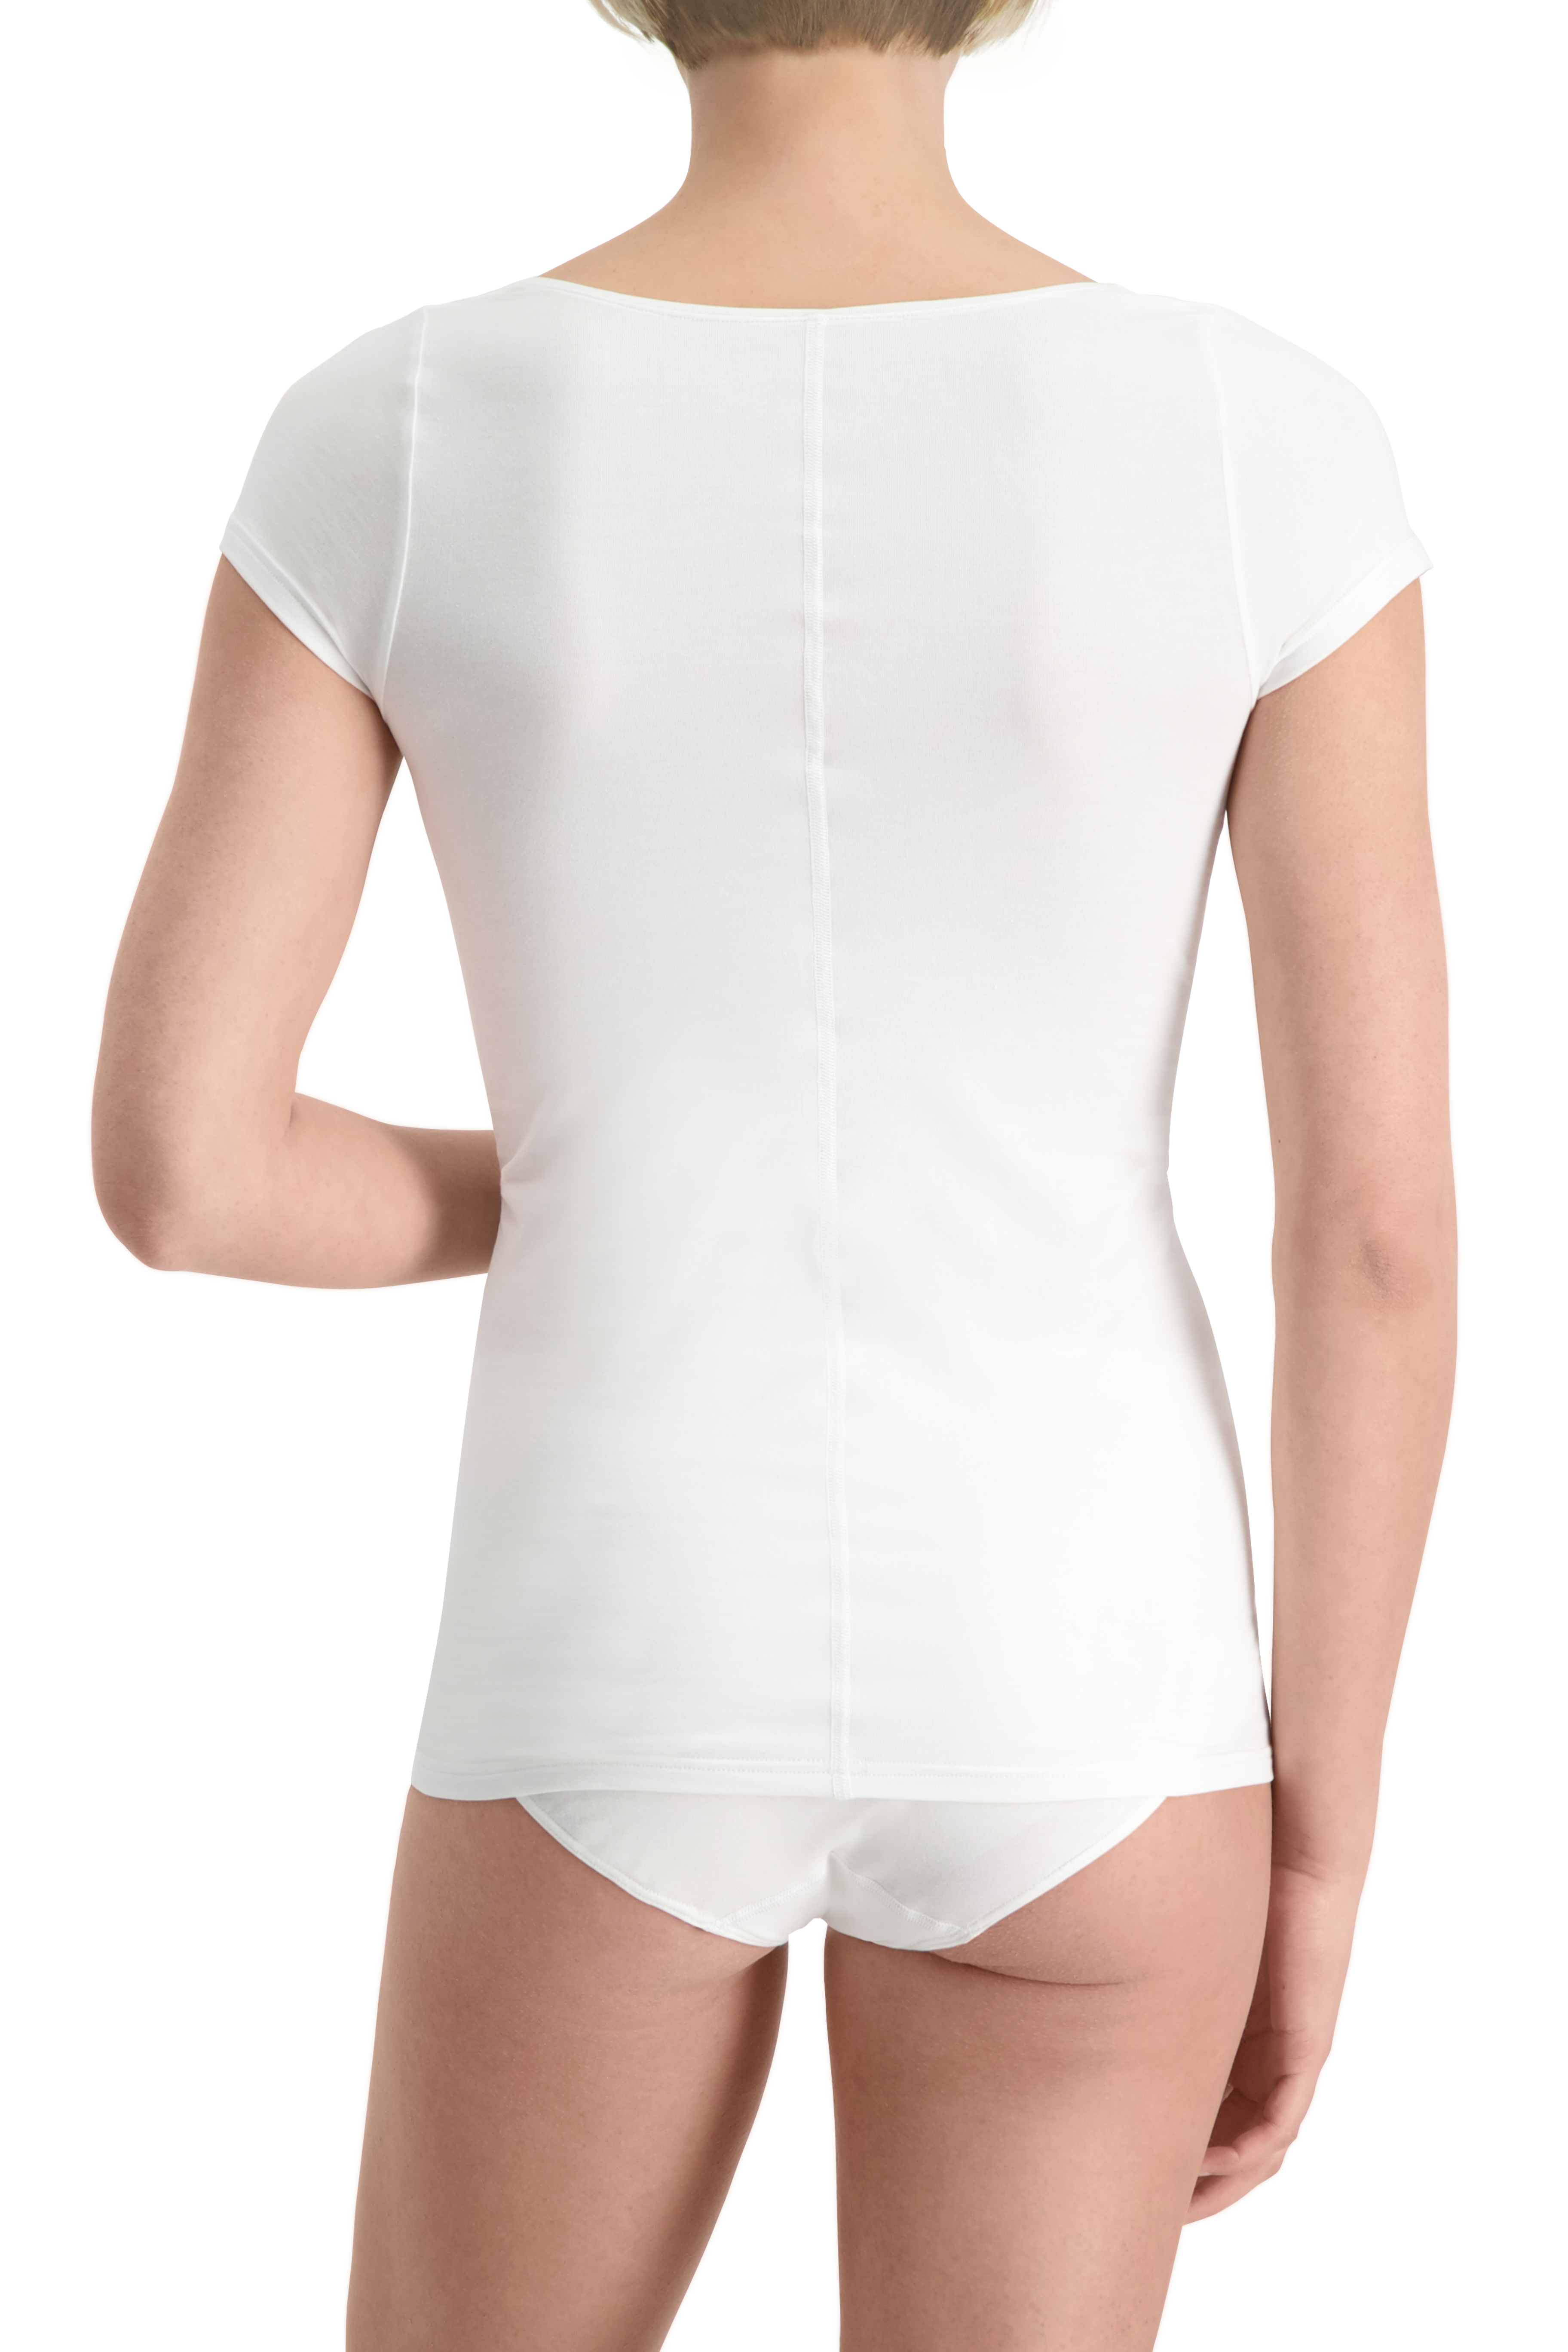 women undershirt sleeve Invisible short for - Noshirt